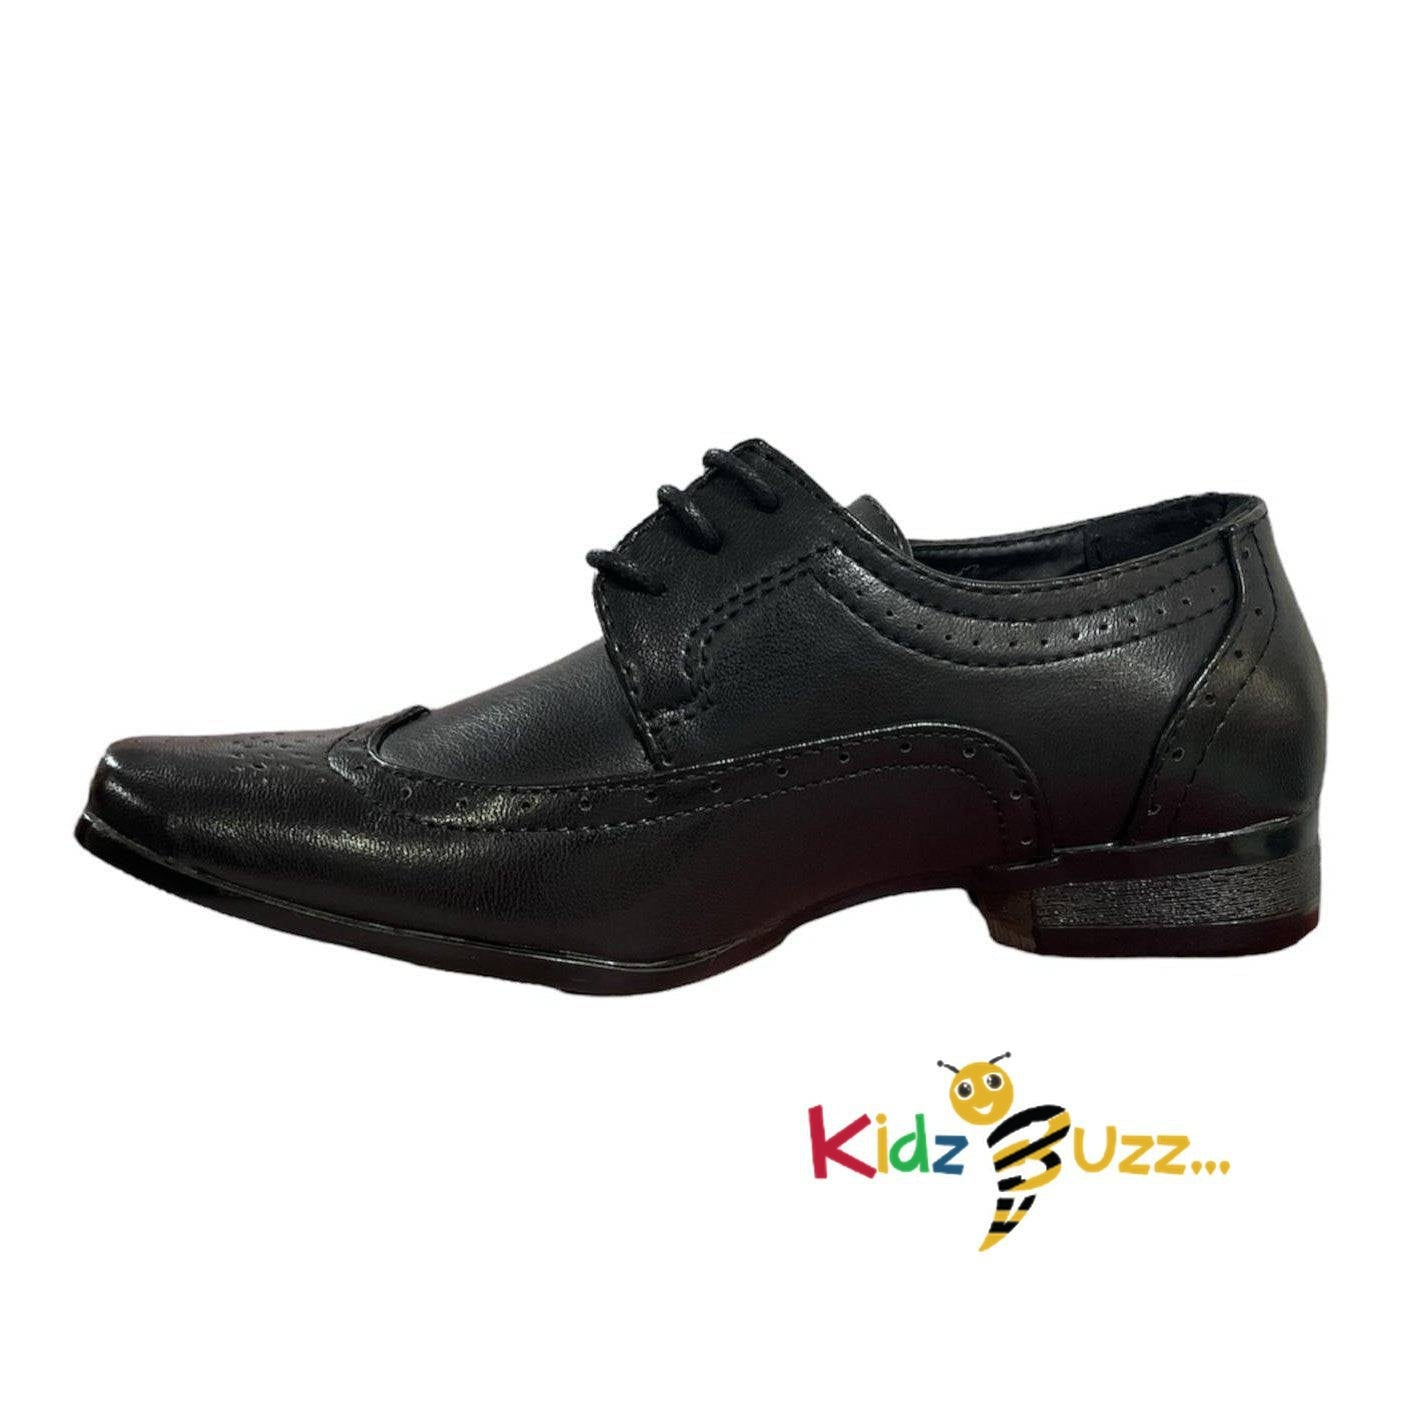 Sevva Kids Shoes Black Colour, 1211